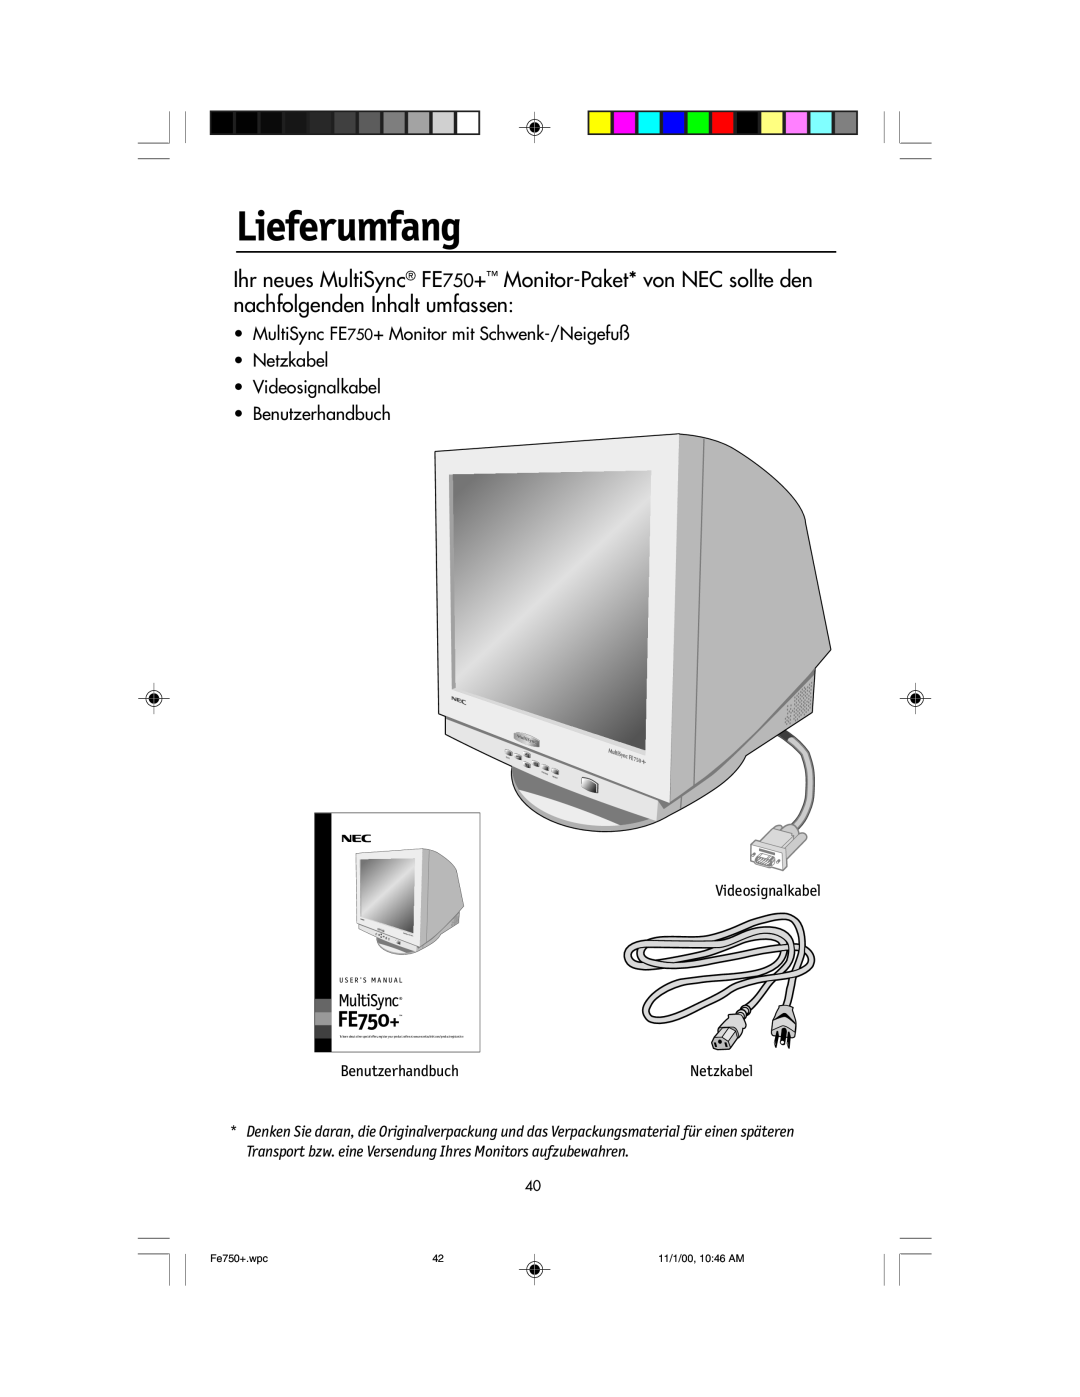 NEC FE750 Plus user manual Lieferumfang, FE750+, Benutzerhandbuch, Videosignalkabel Netzkabel, Fe750+.wpc, 11/1/00, 1046 AM 